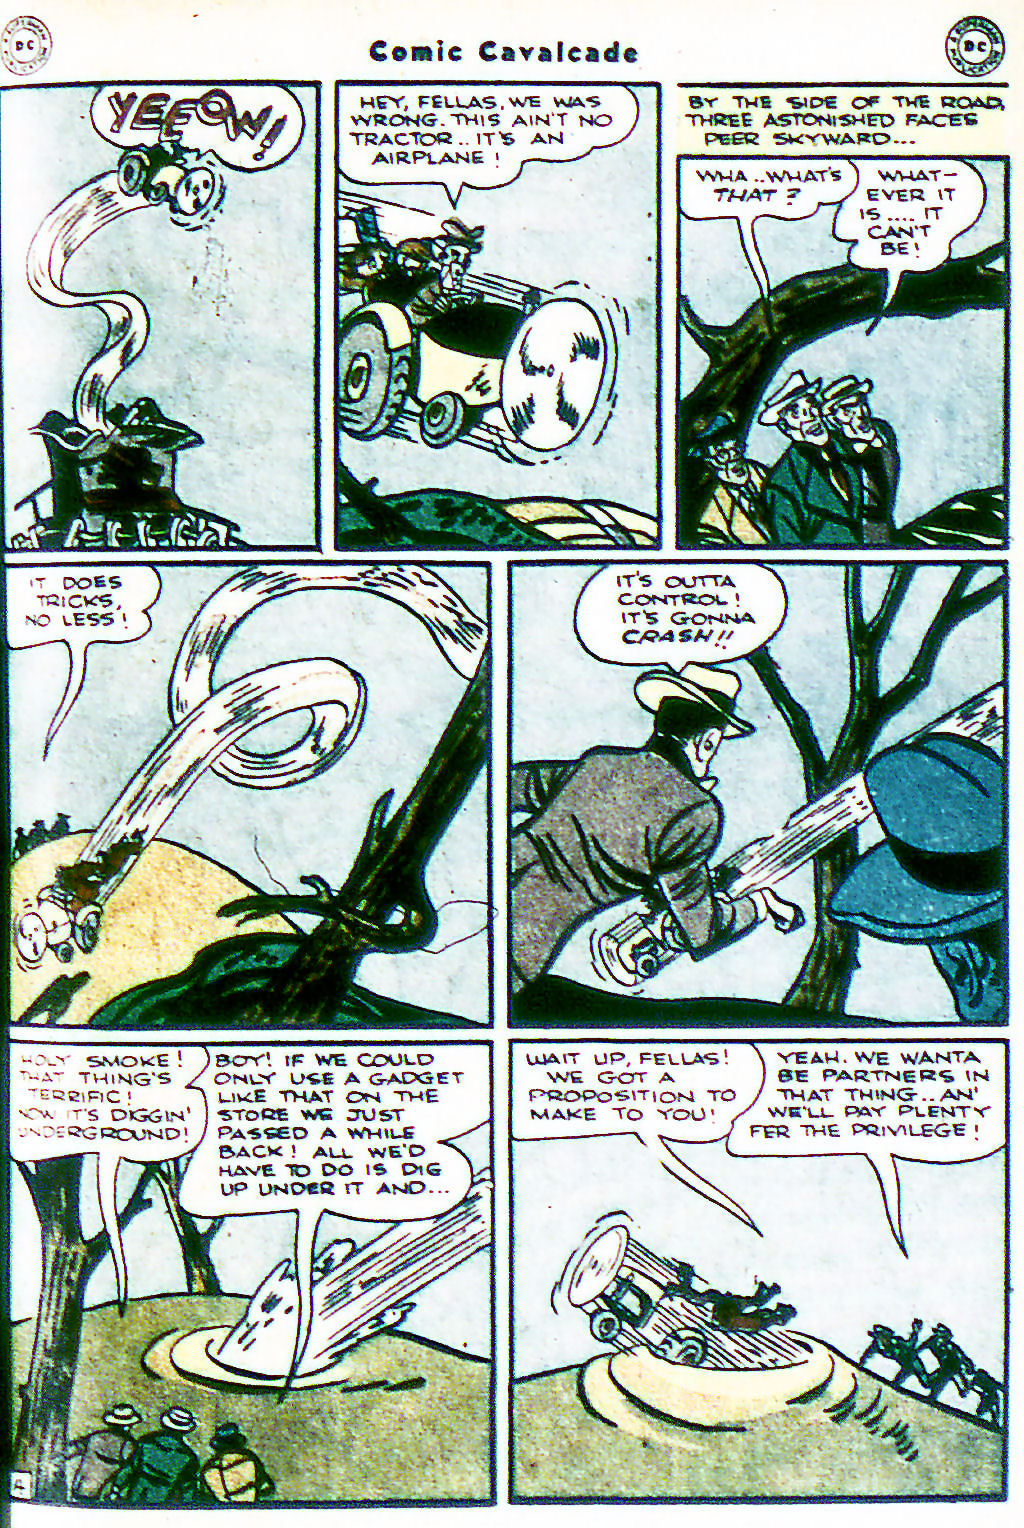 Comic Cavalcade issue 17 - Page 26